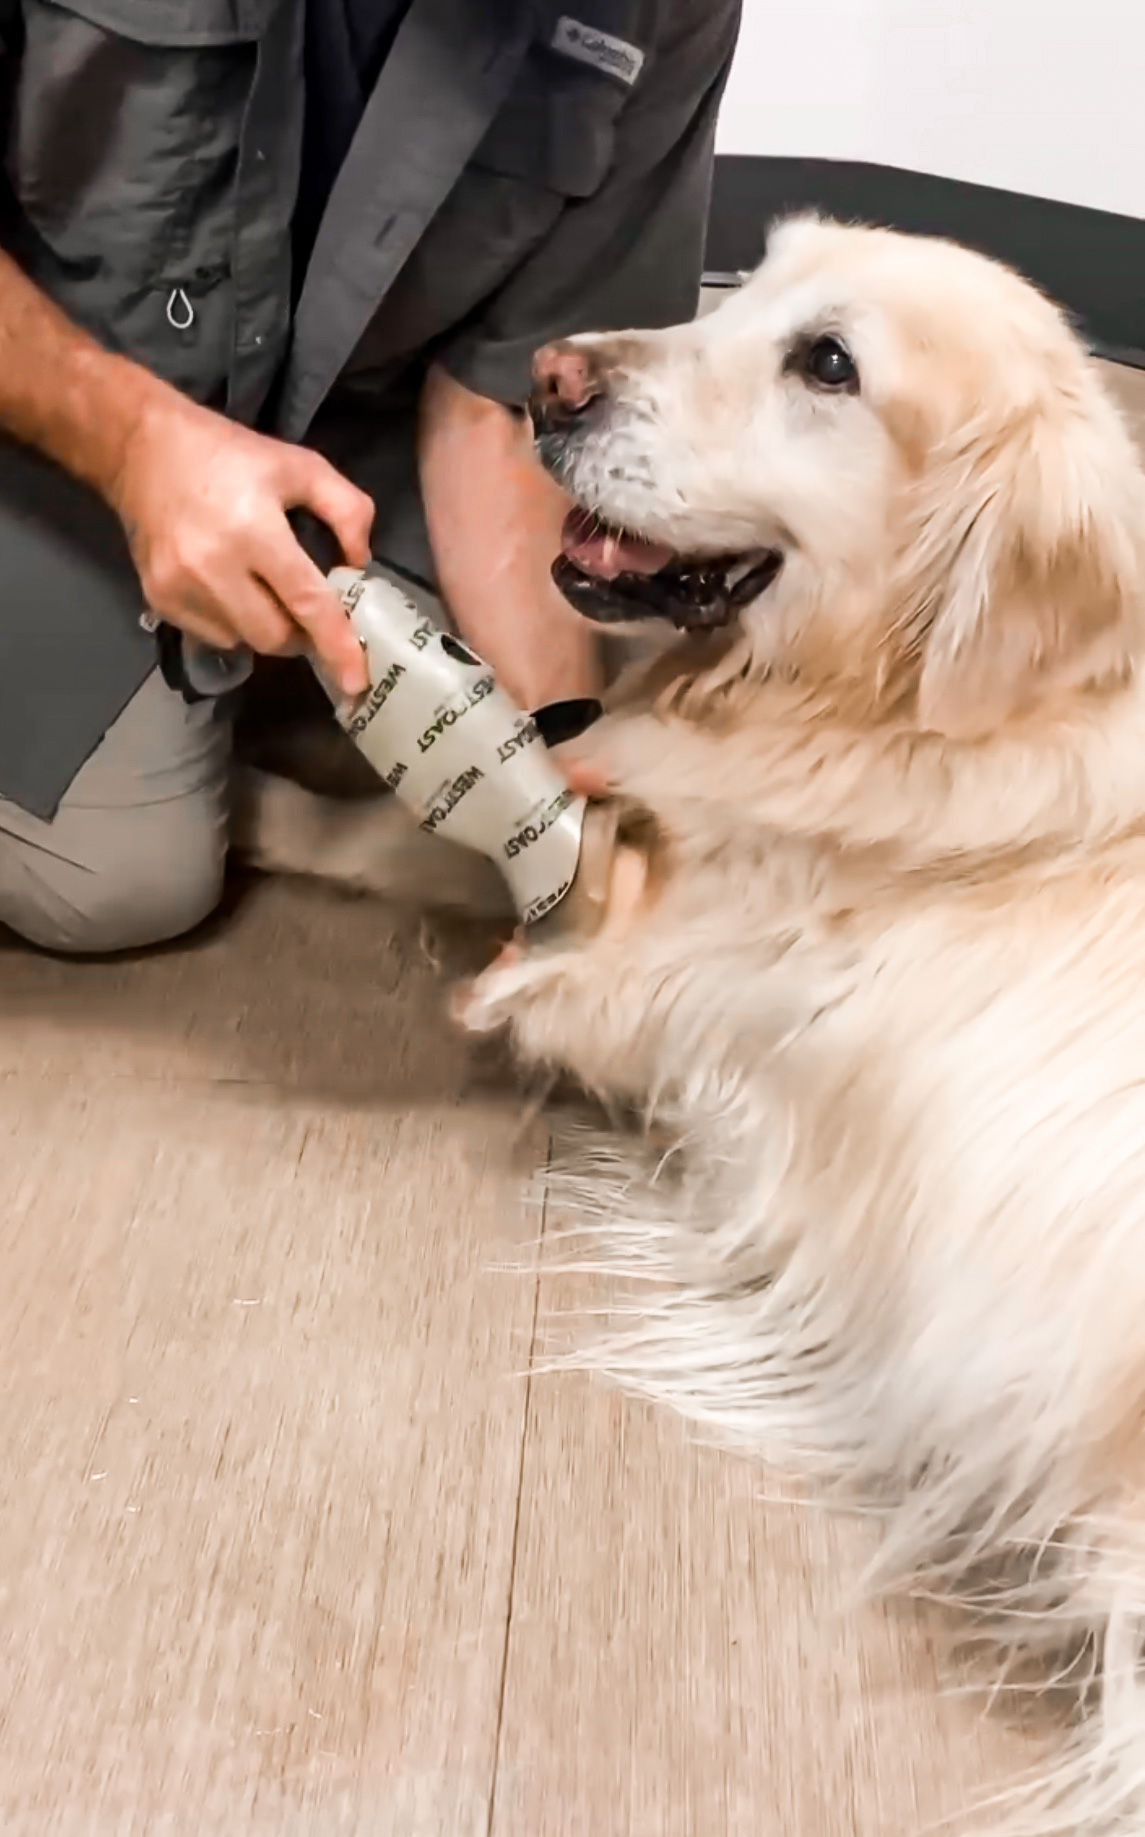 golden retriever dog with prosthetic leg, shaking humans hand